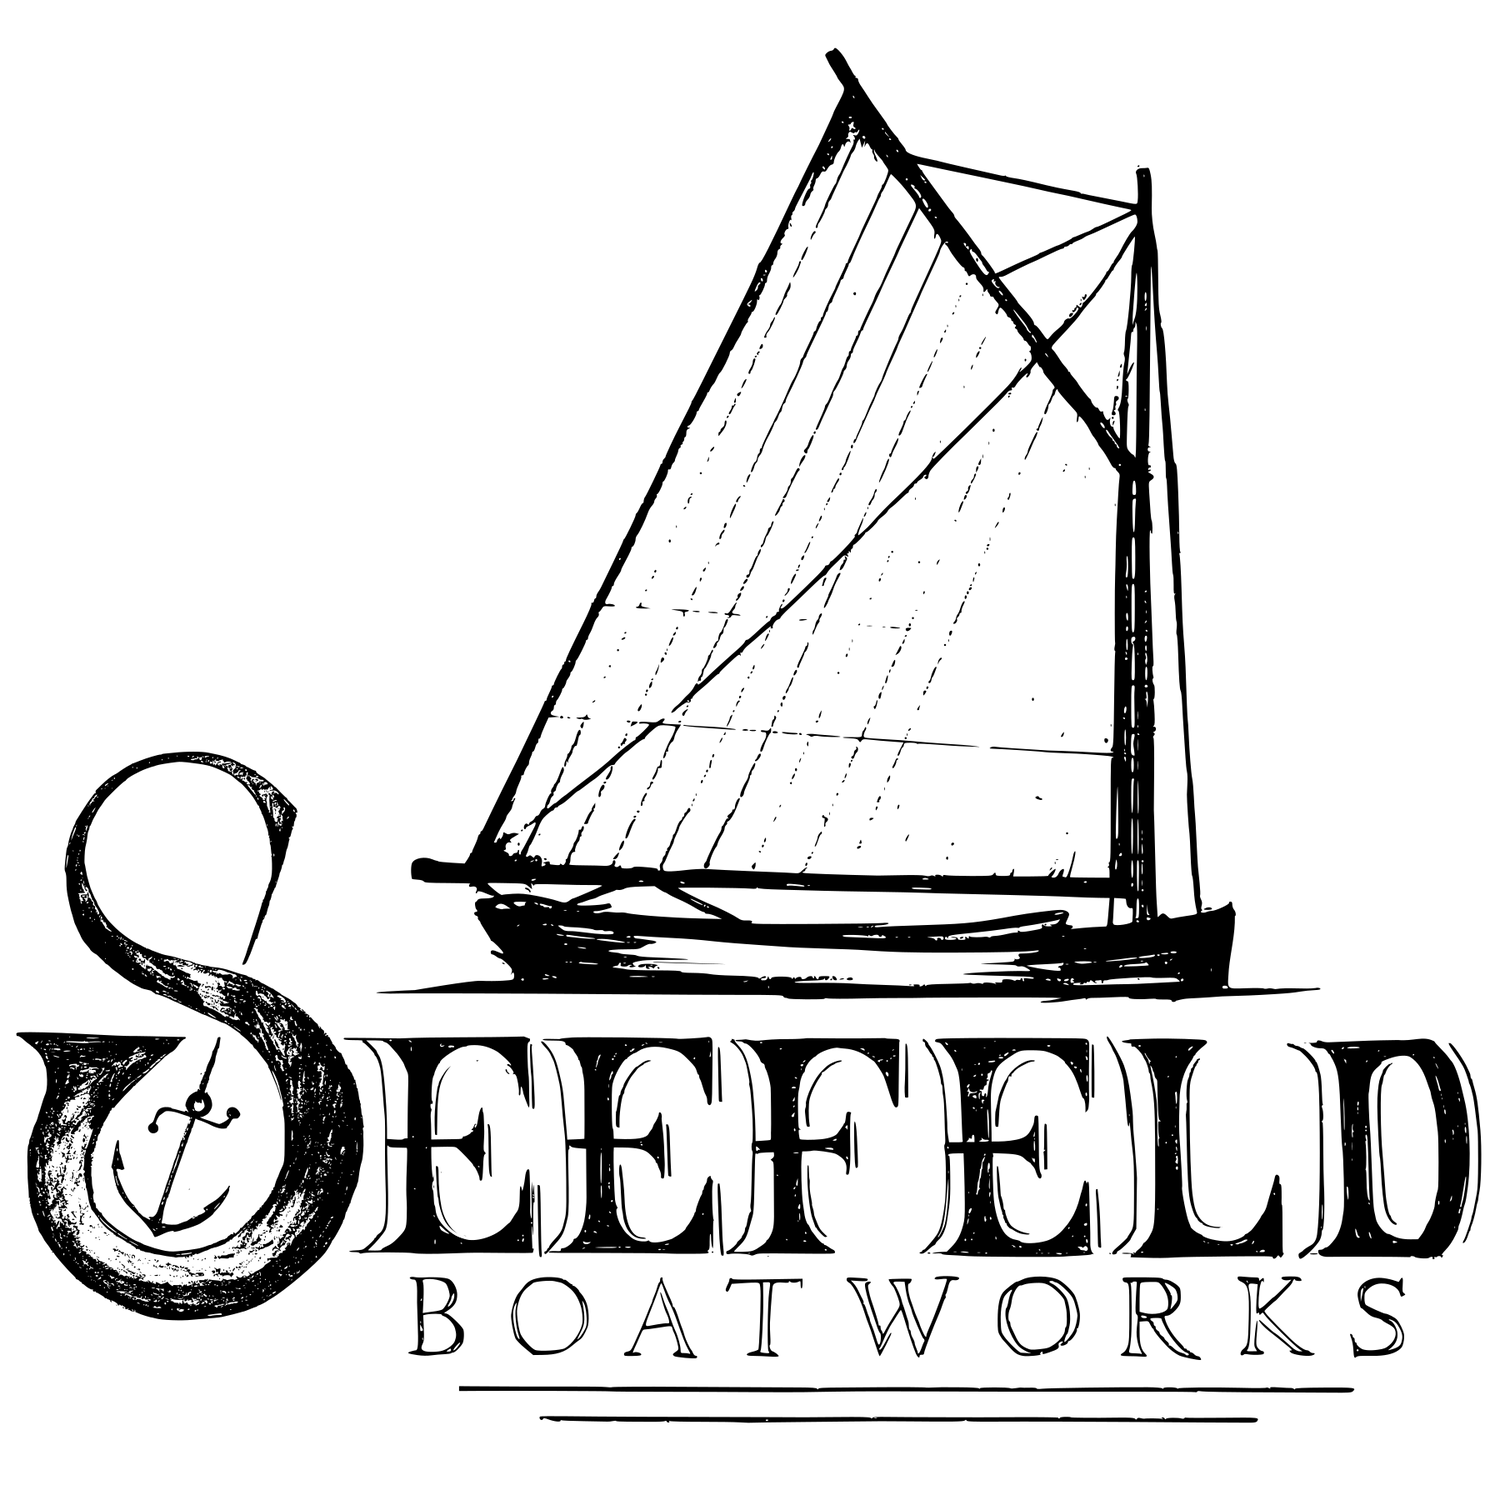 Seefeld Boatworks